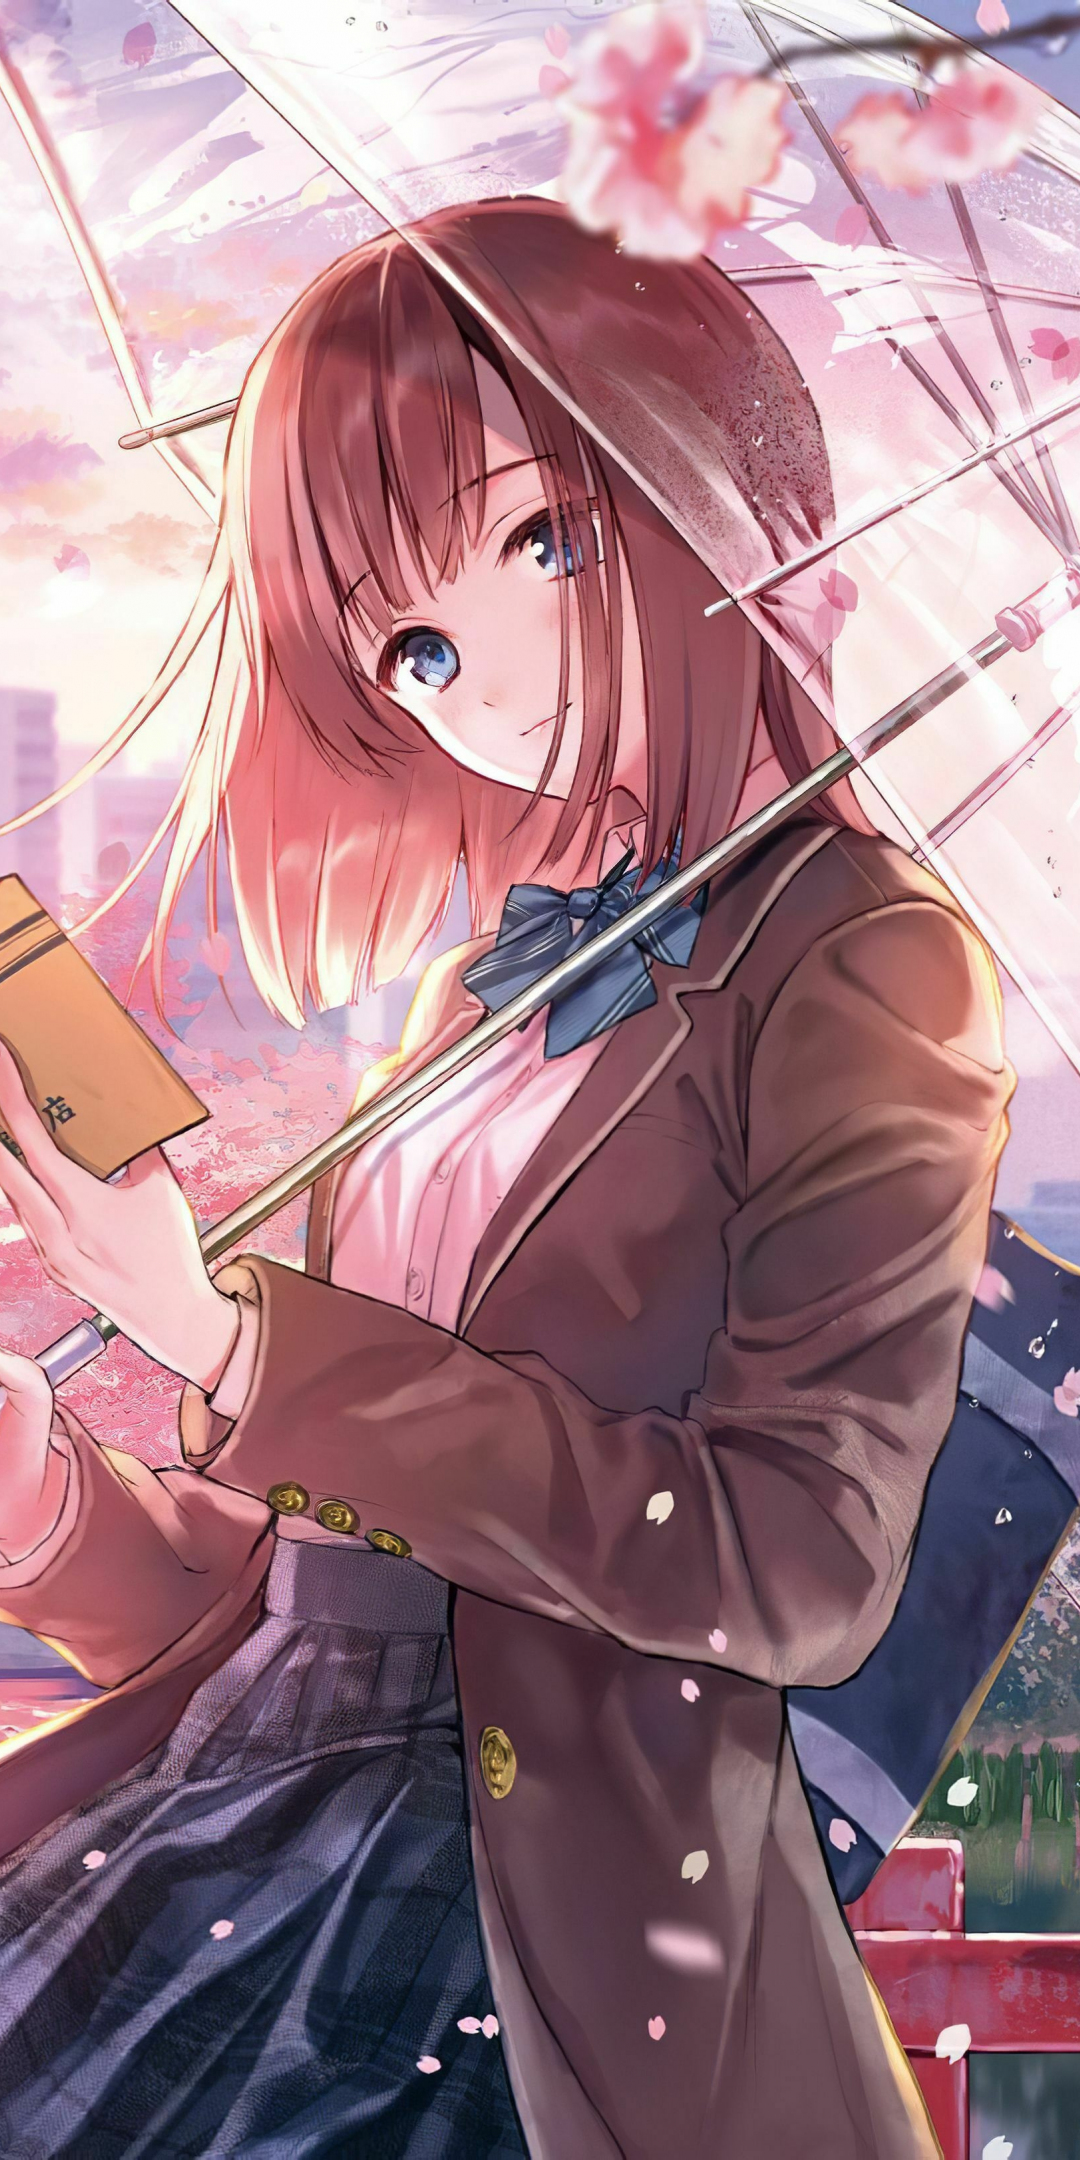 Fun in blossom, anime girl, 1080x2160 wallpaper